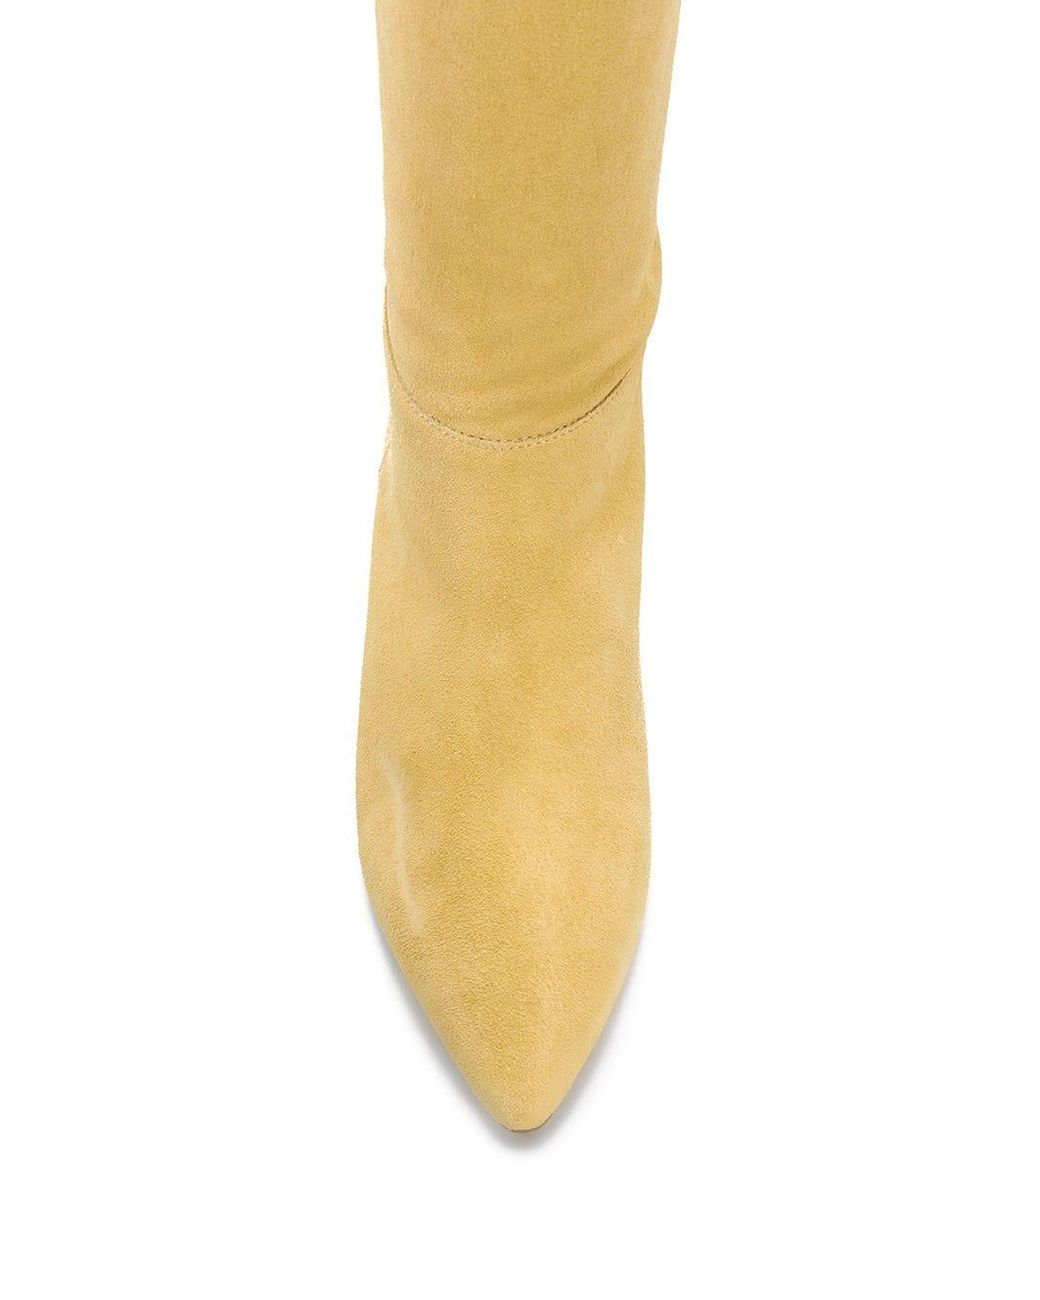 Ba&sh Clarys Mid-calf Length Boots in Yellow | Lyst Australia